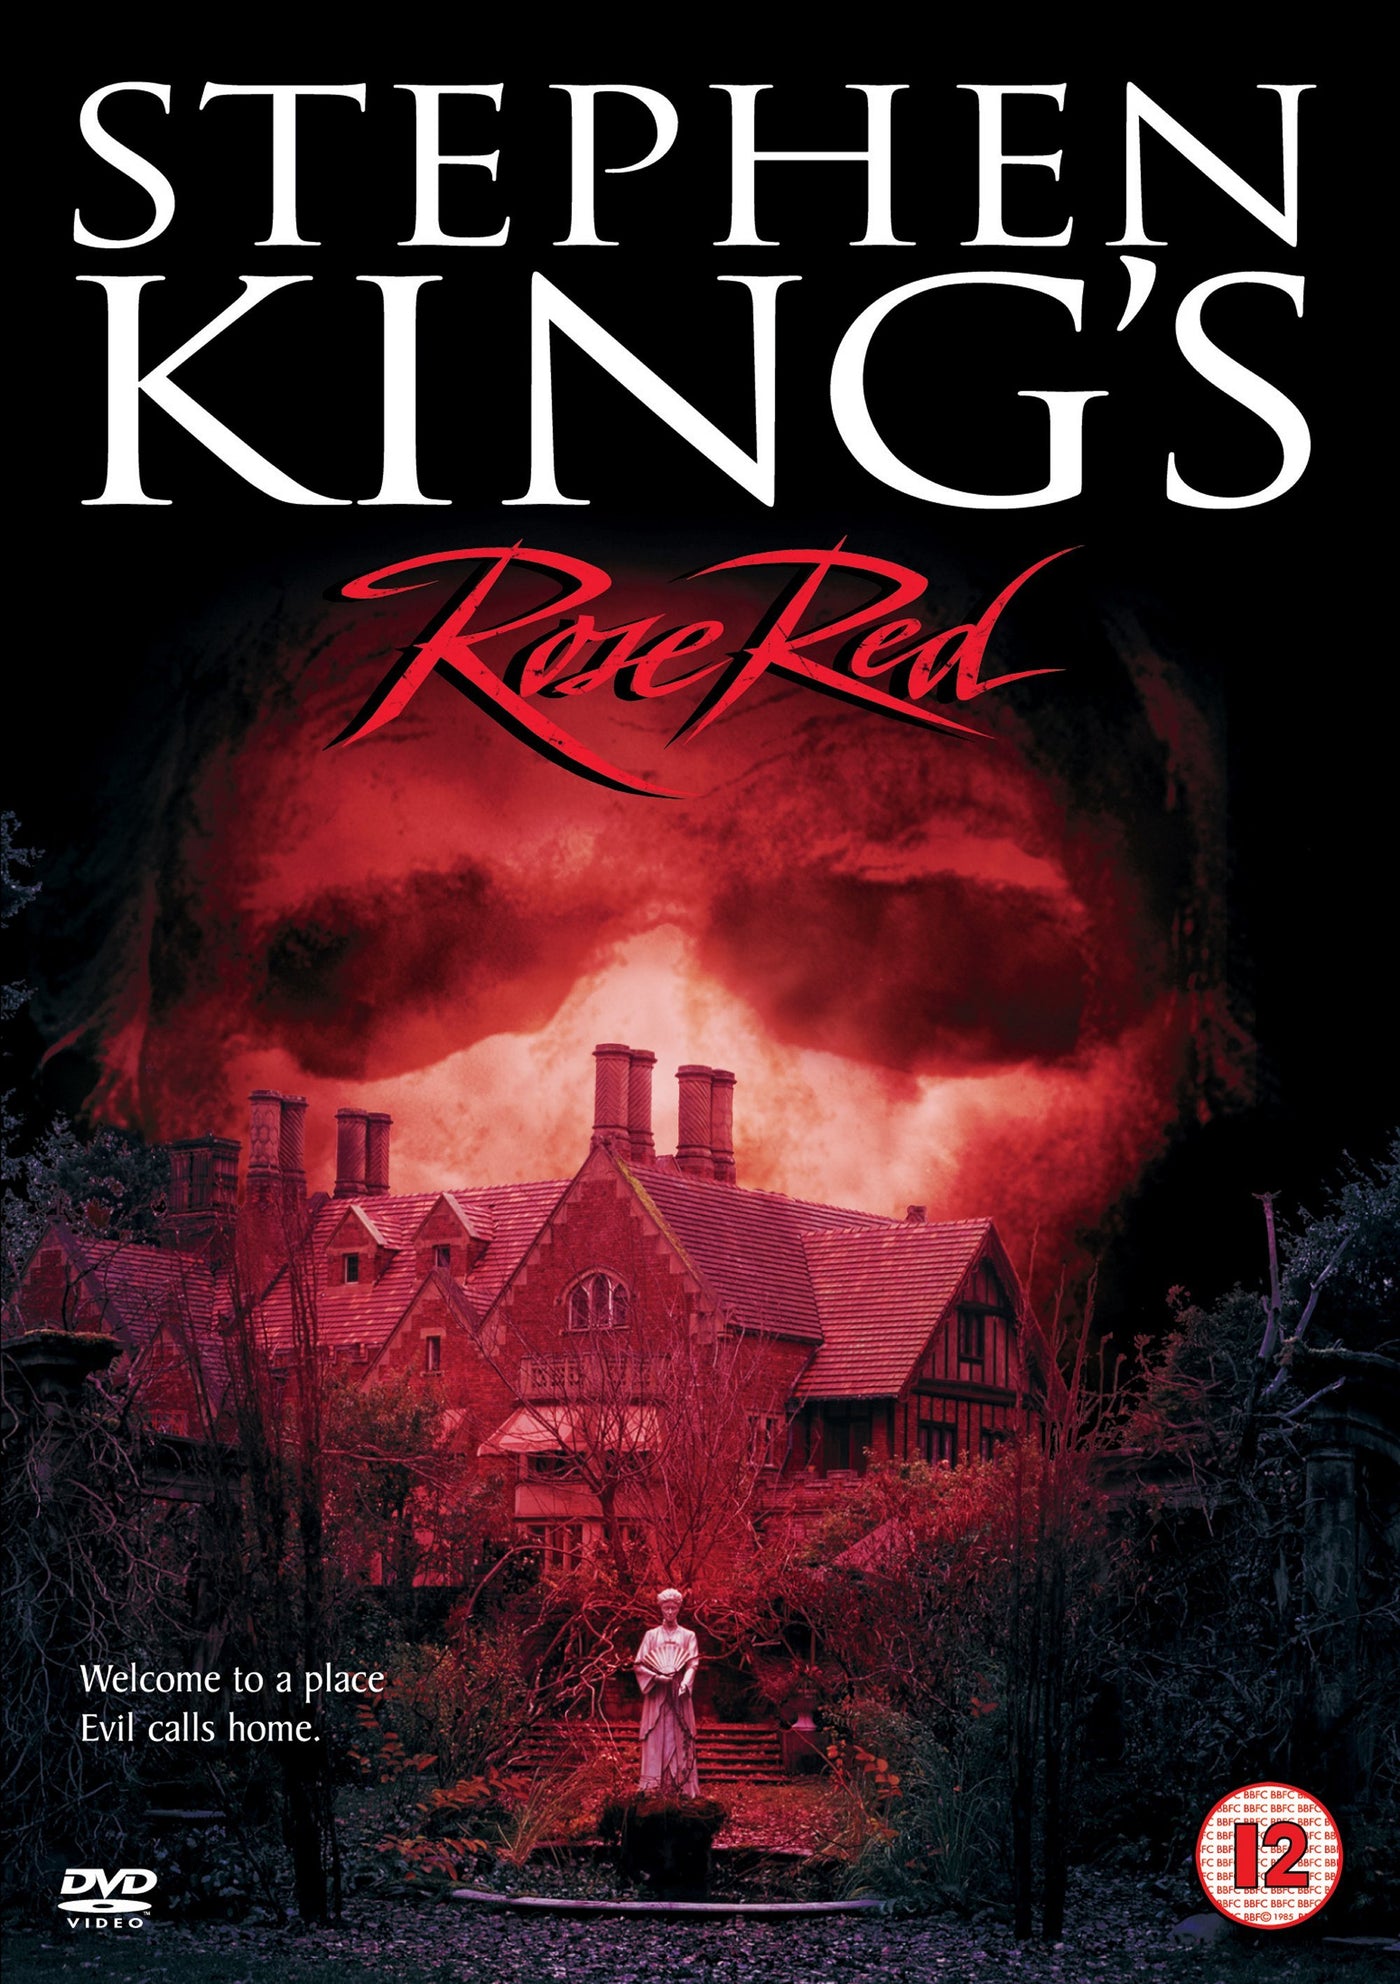 Stephen King's Rose Red [2003] (DVD)